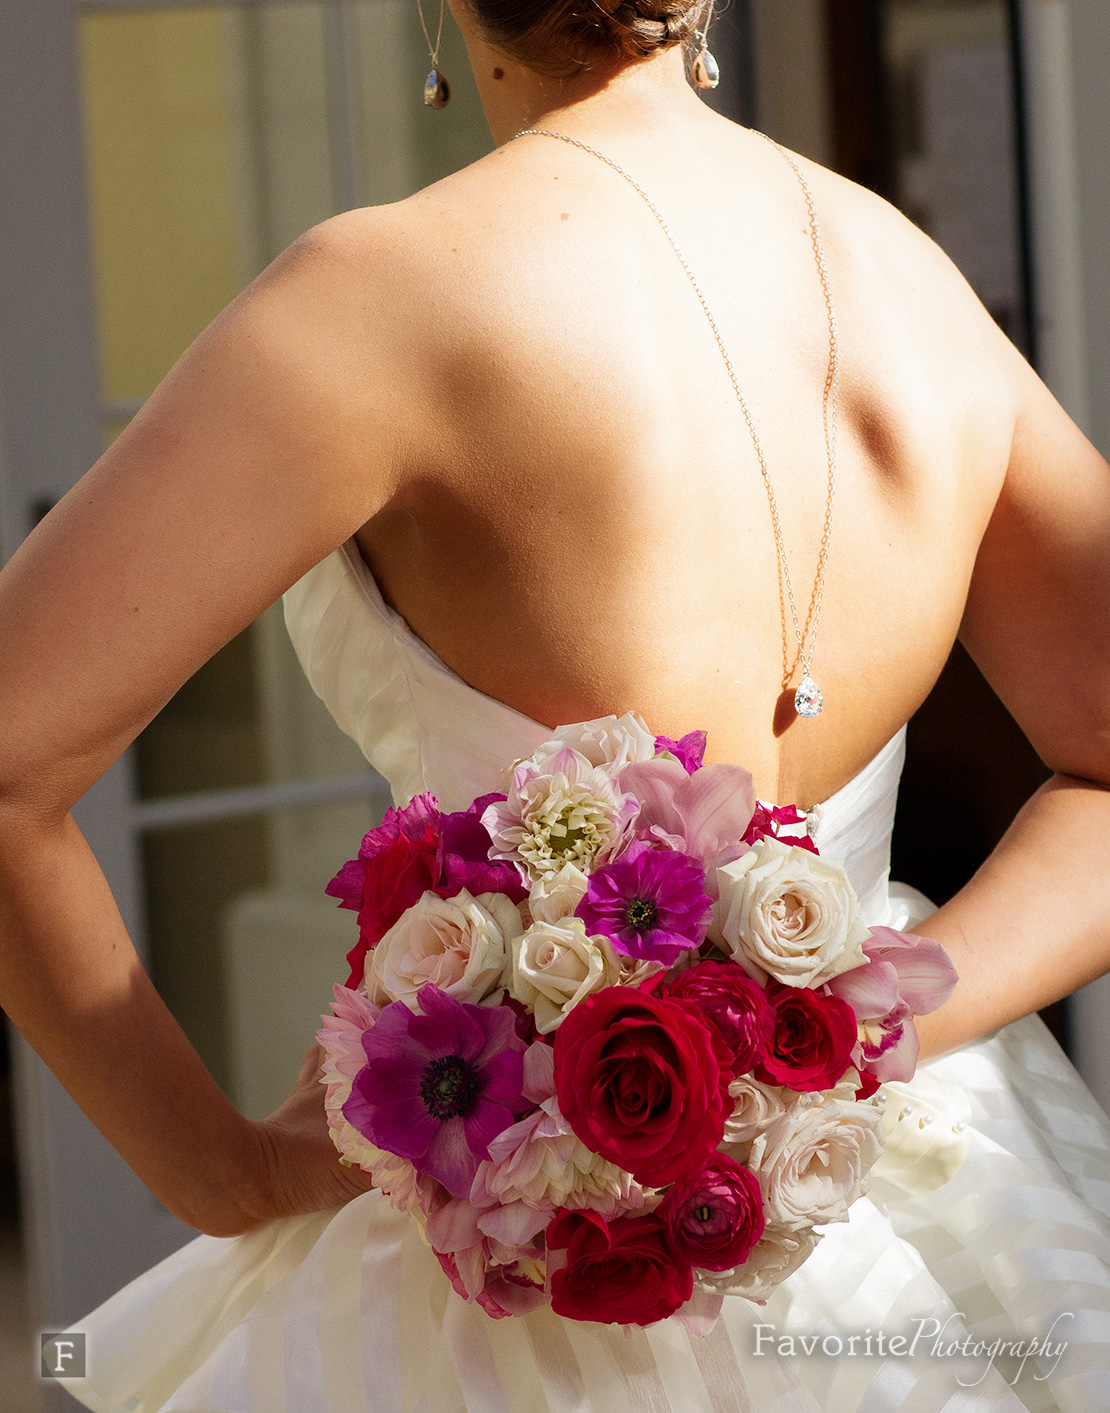 Stunning Bridal Bouquet Photo